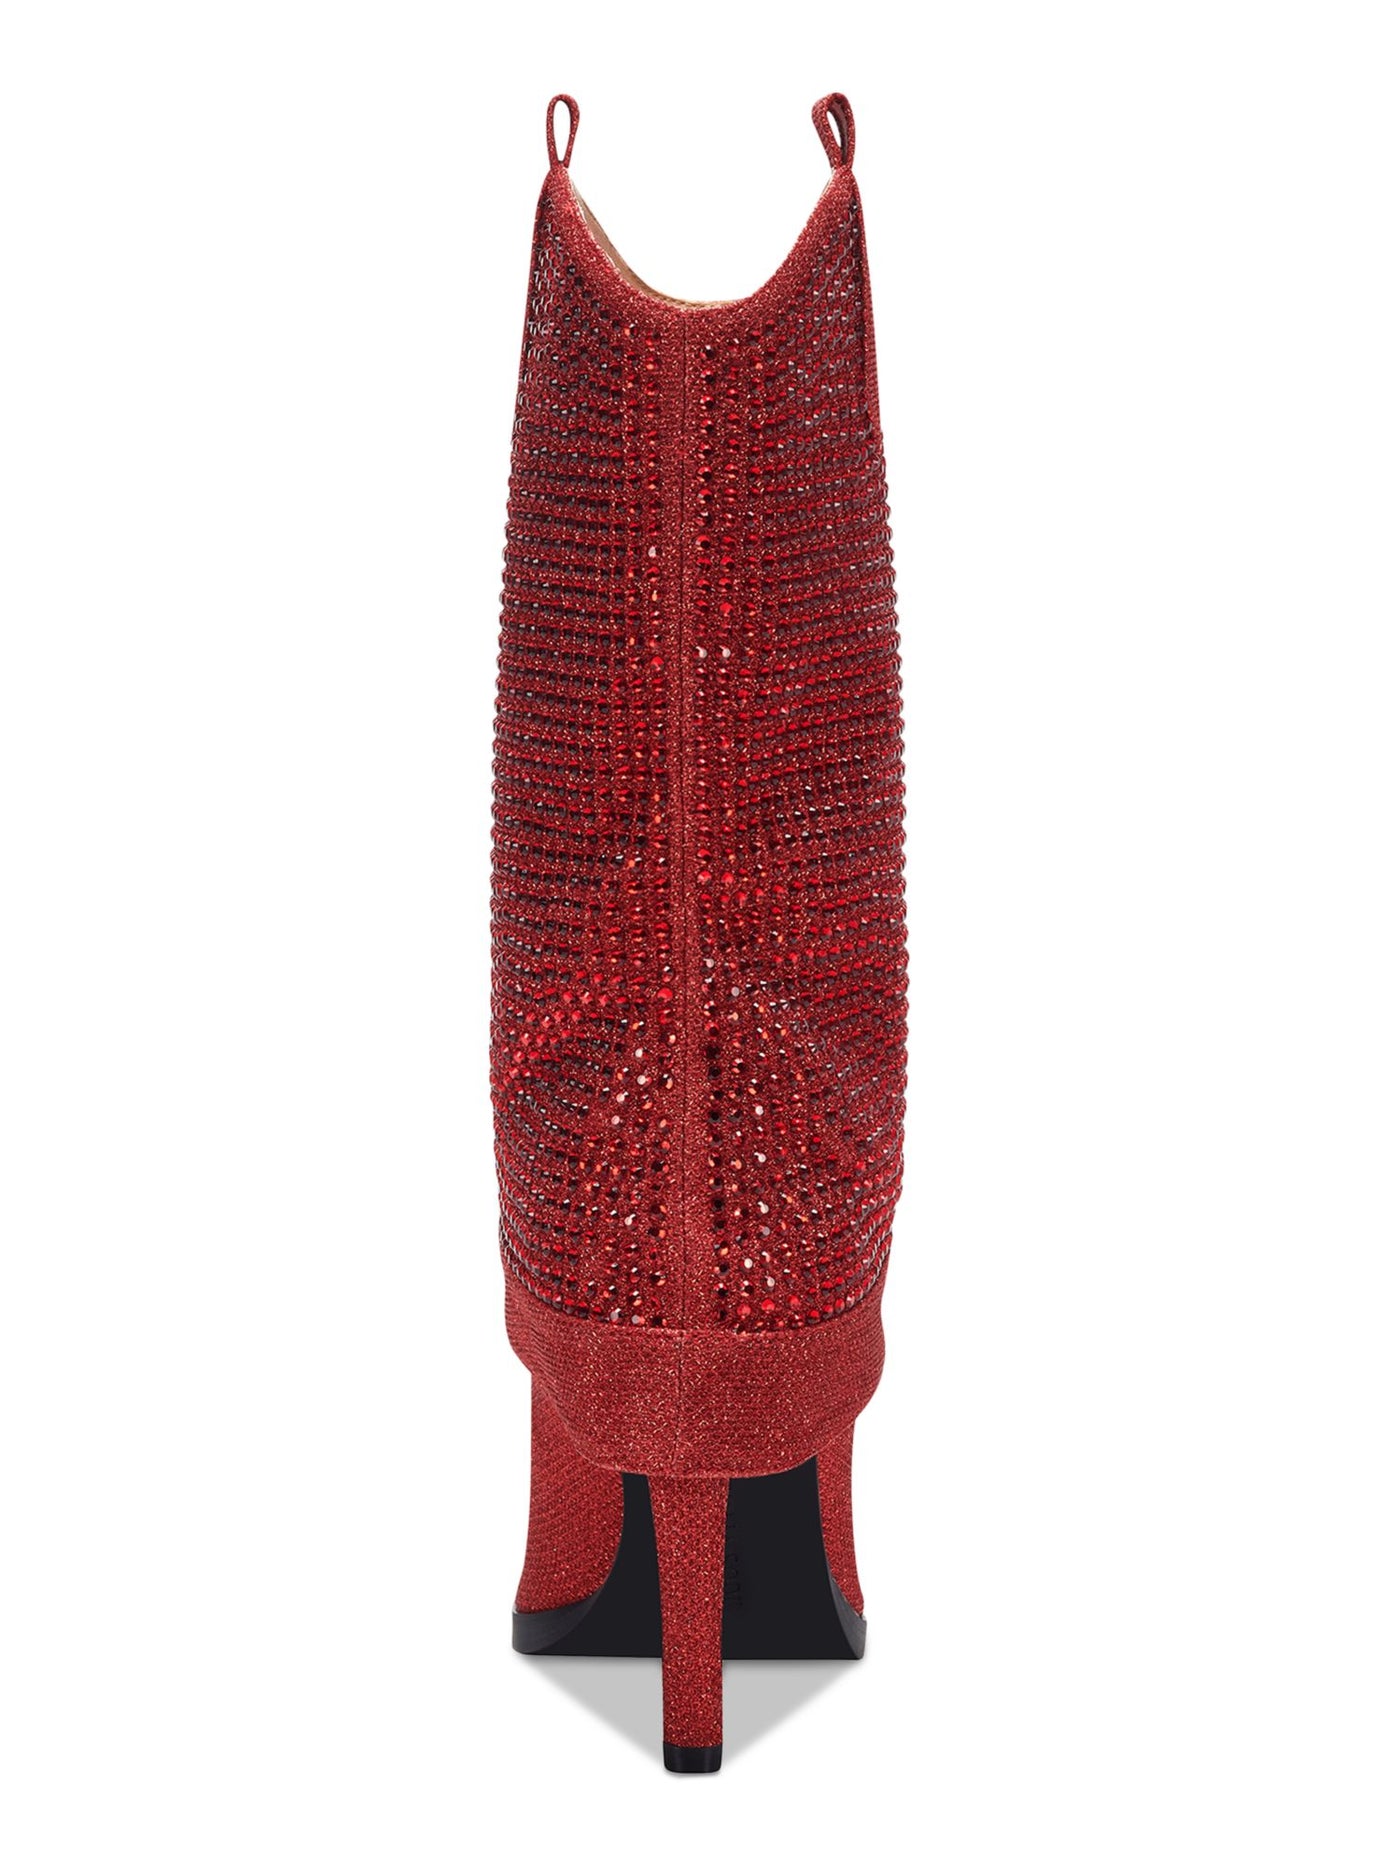 THALIA SODI Womens Red Rhinestone Nellie Pointed Toe Stiletto Dress Western Boot 10 M